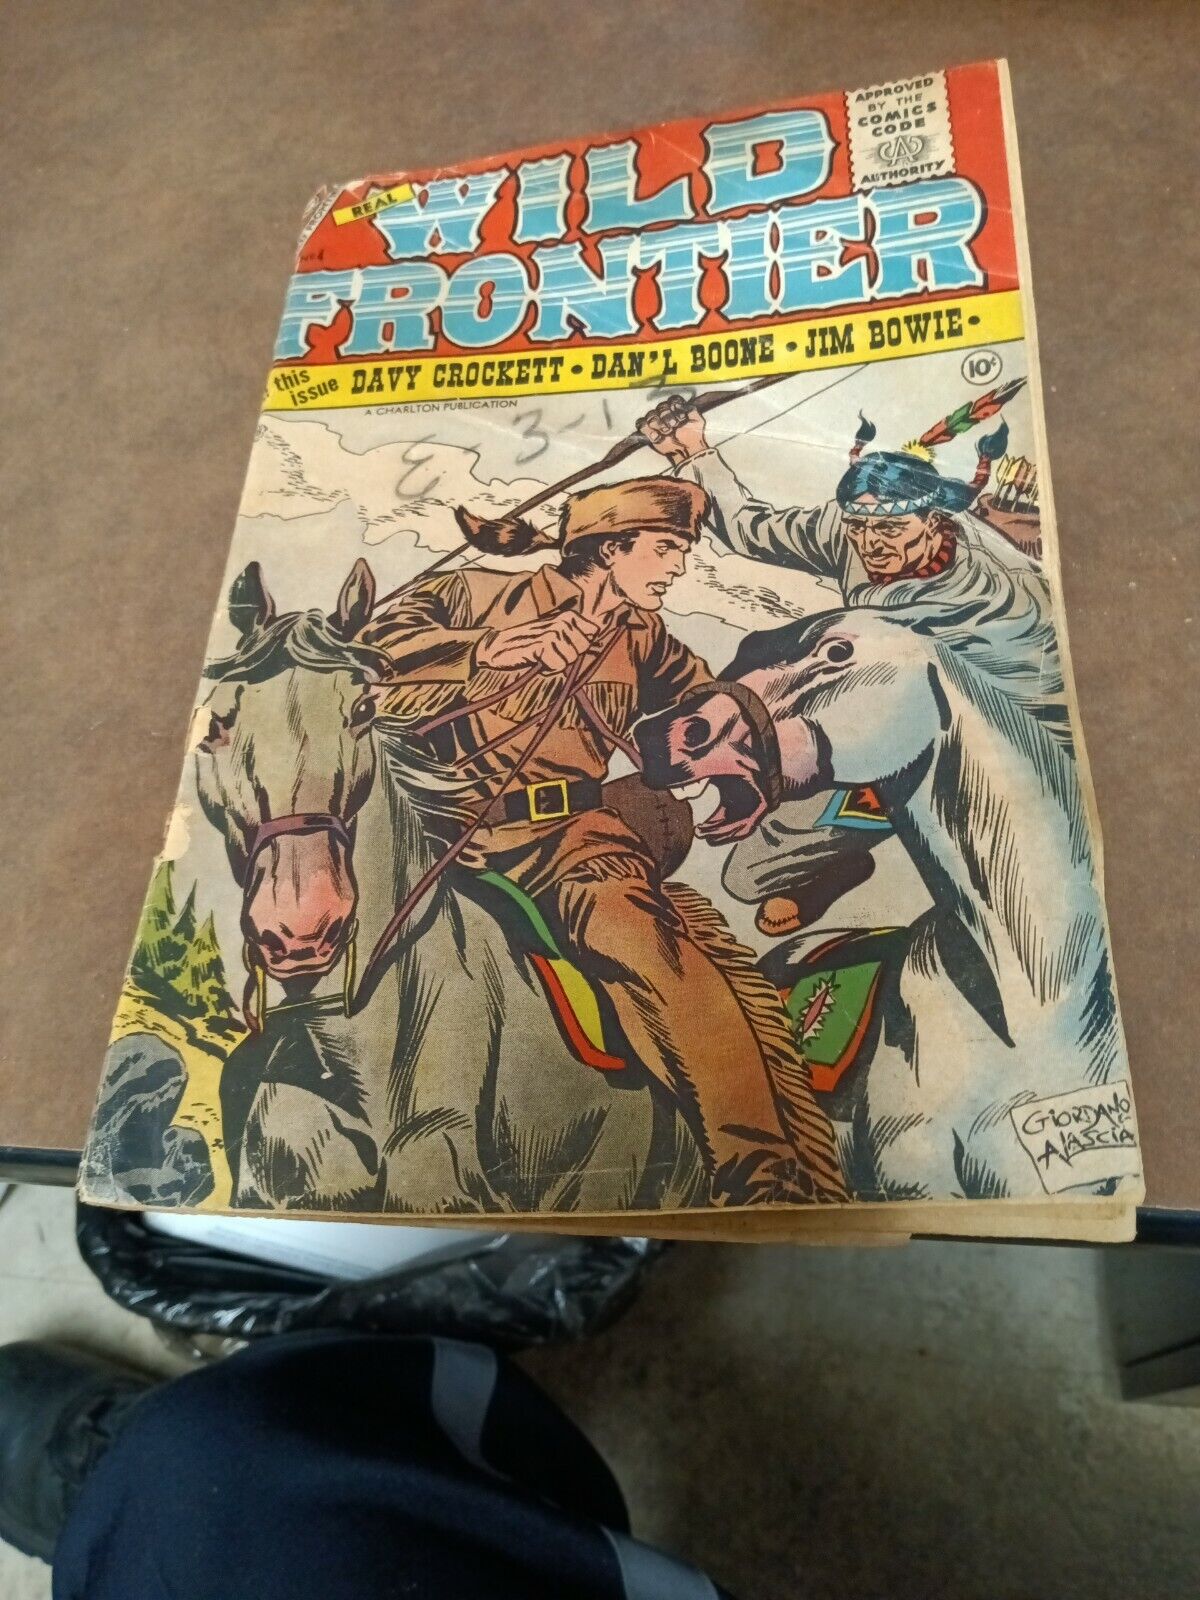 Wild Frontier #4 Charlton Comics 1956 Crockett Boone Bowie silver age western